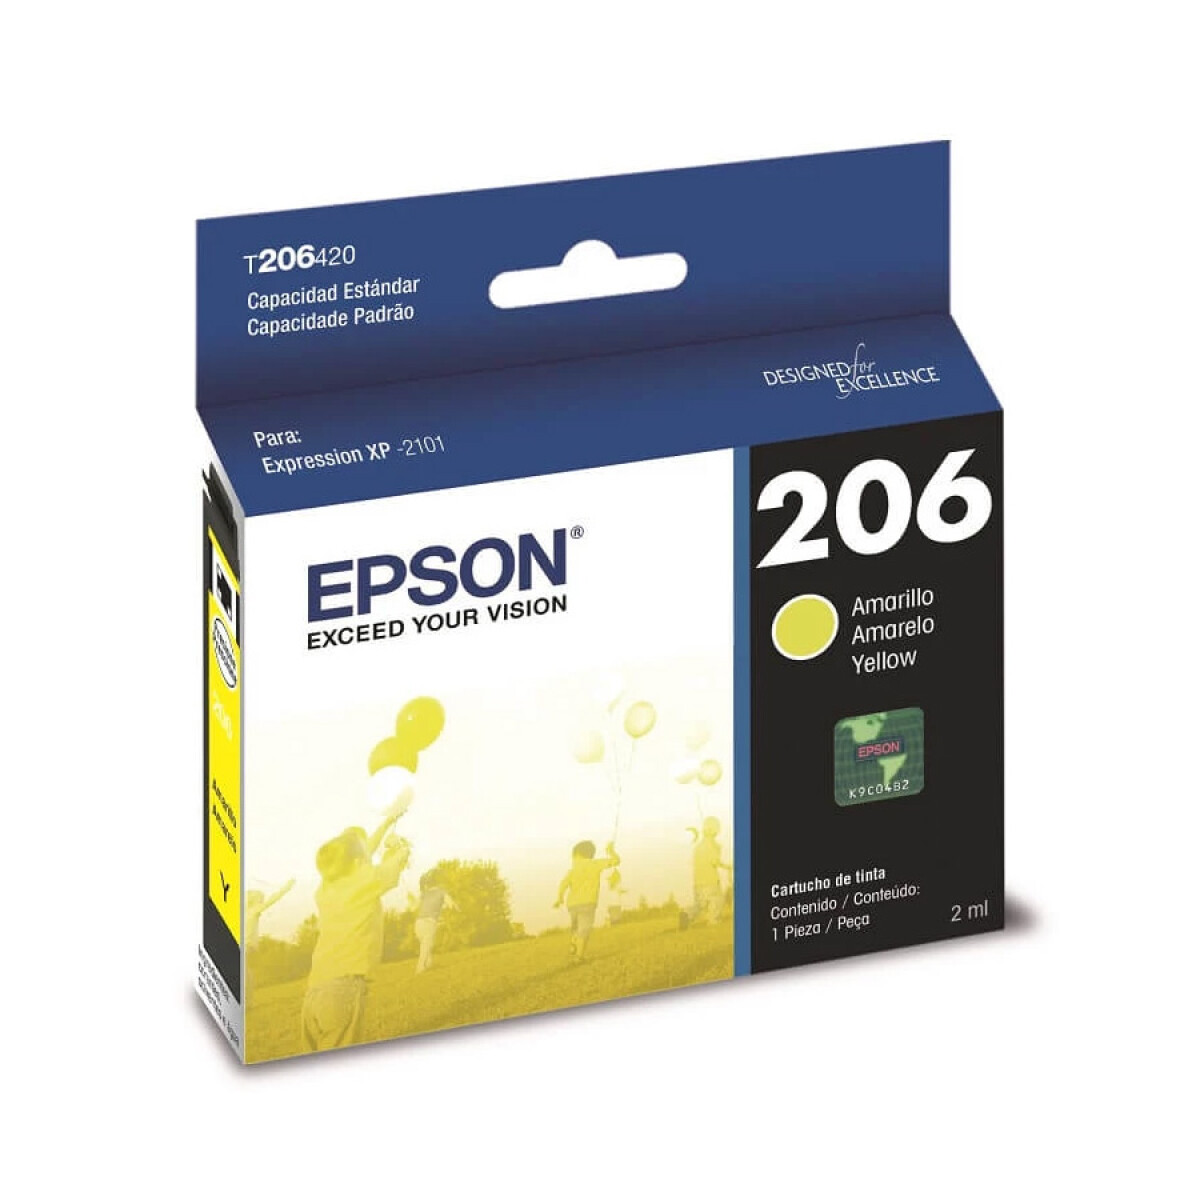 Cartucho de Tinta Epson T206 para Impresora Epson XP2101 - Yellow 